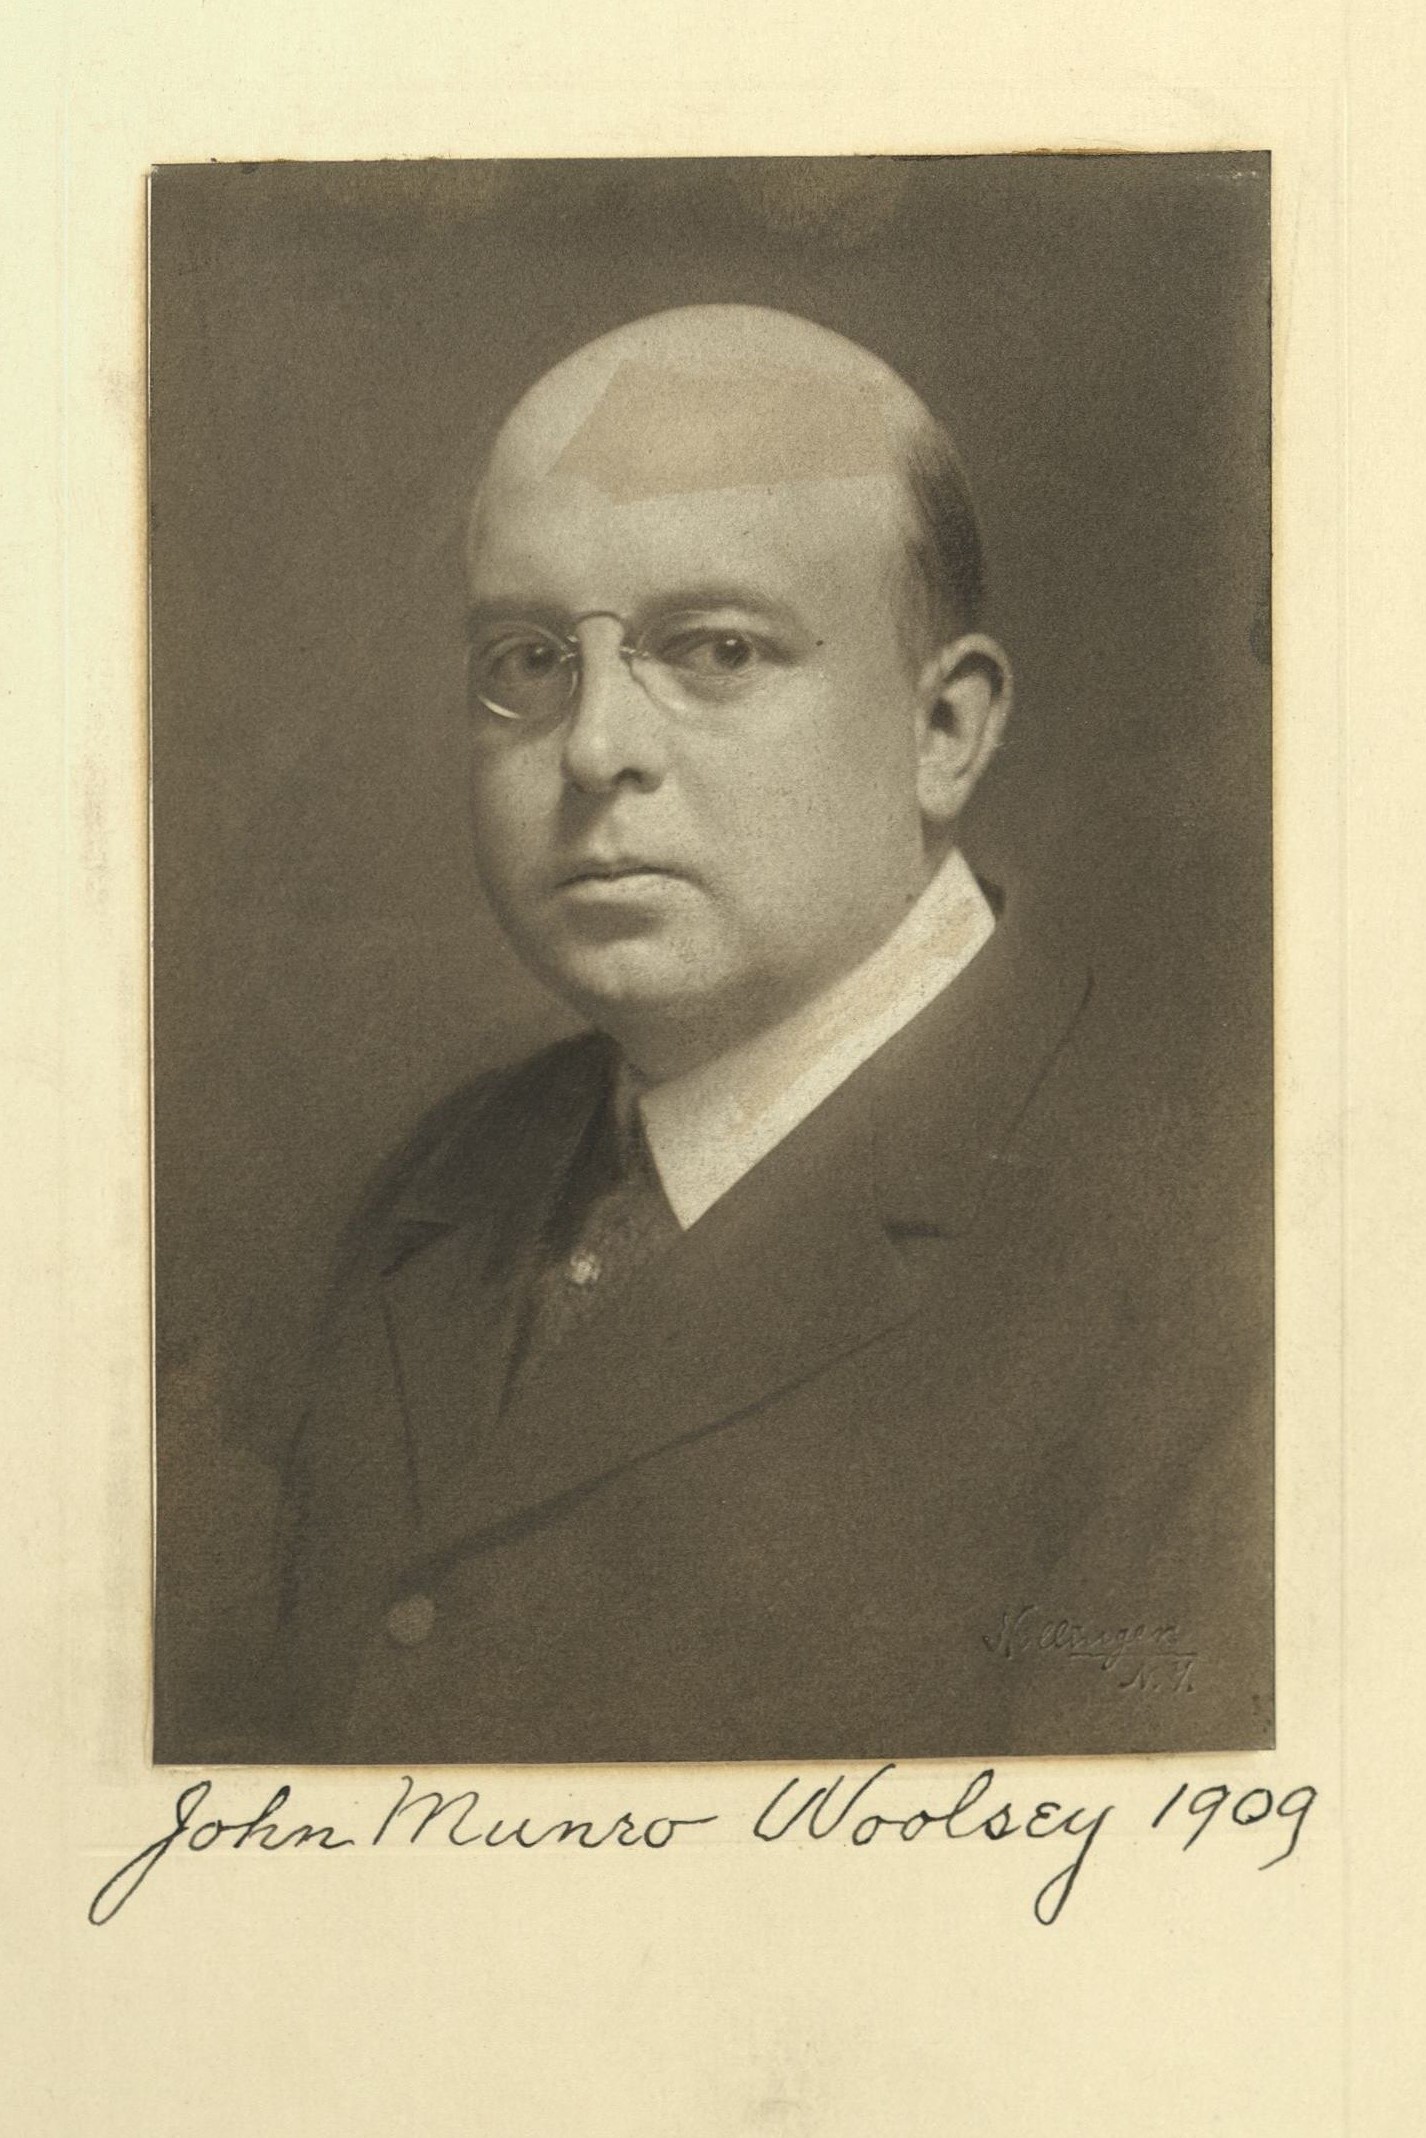 Member portrait of John Munro Woolsey